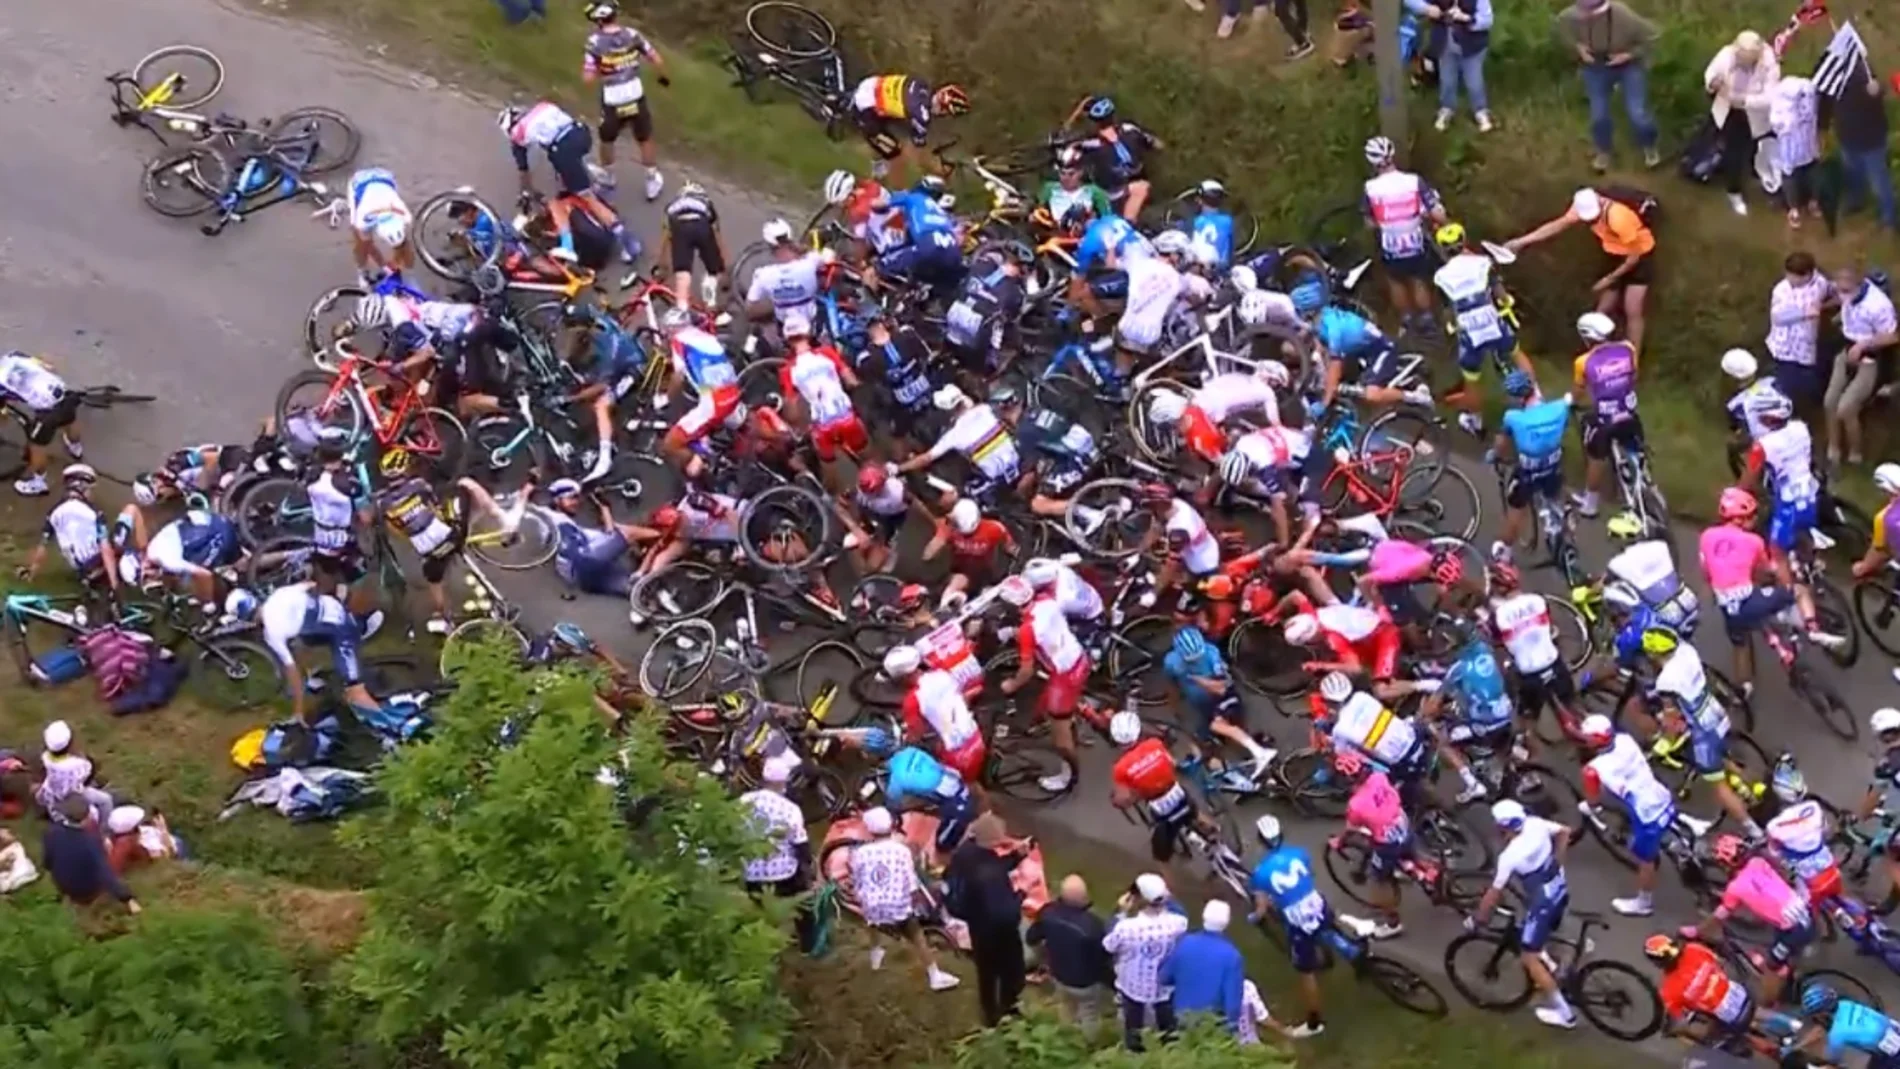 Caída masiva en el pelotón del Tour de Francia por culpa de la pancarta de un espectador